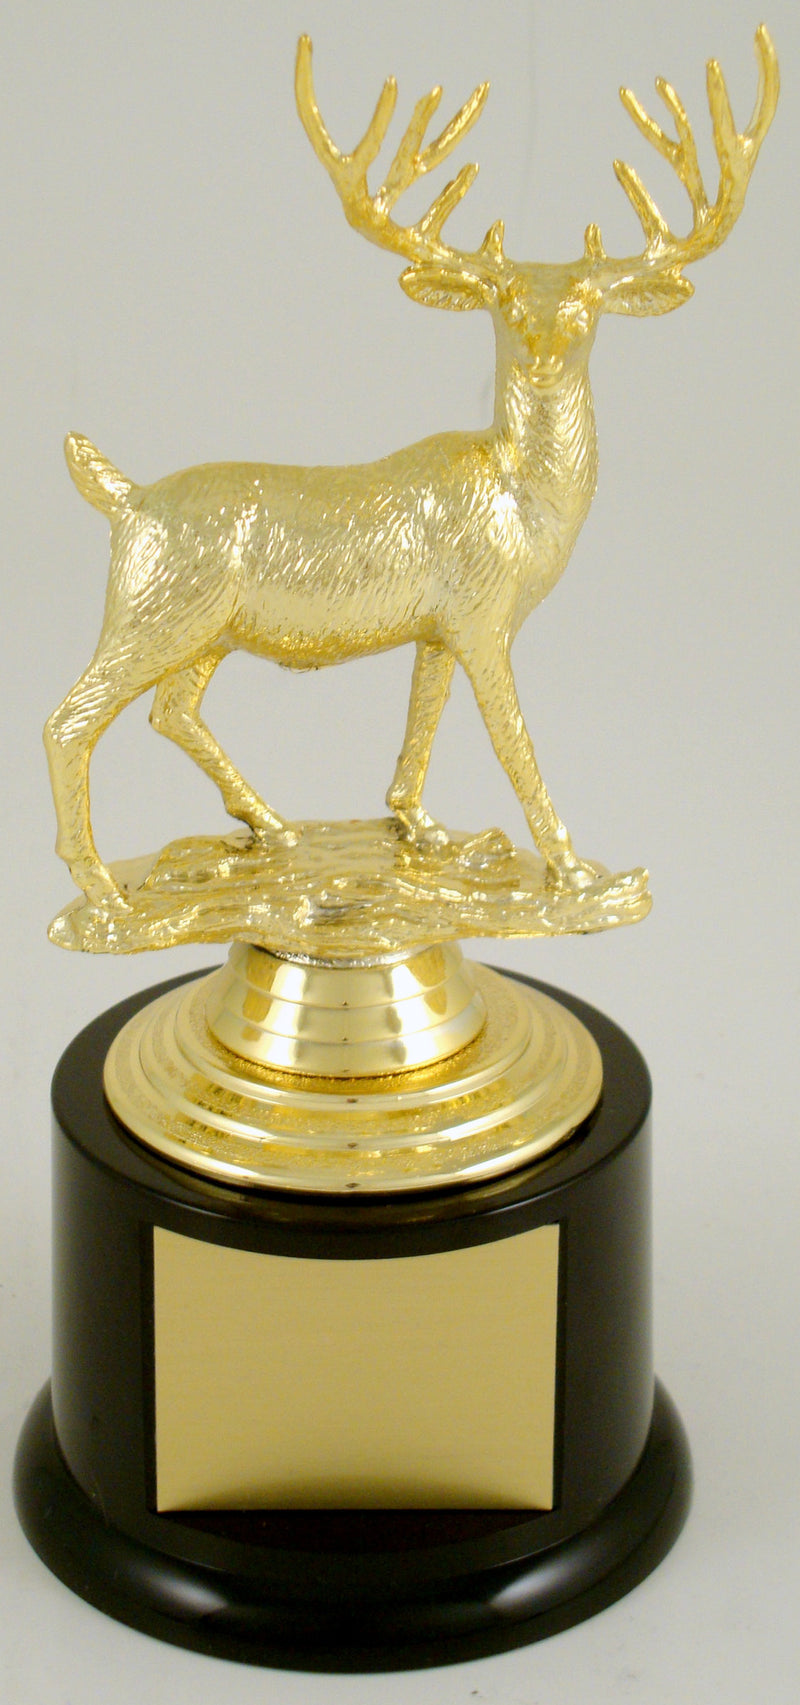 Deer Buck On Black Round Base-Trophy-Schoppy&